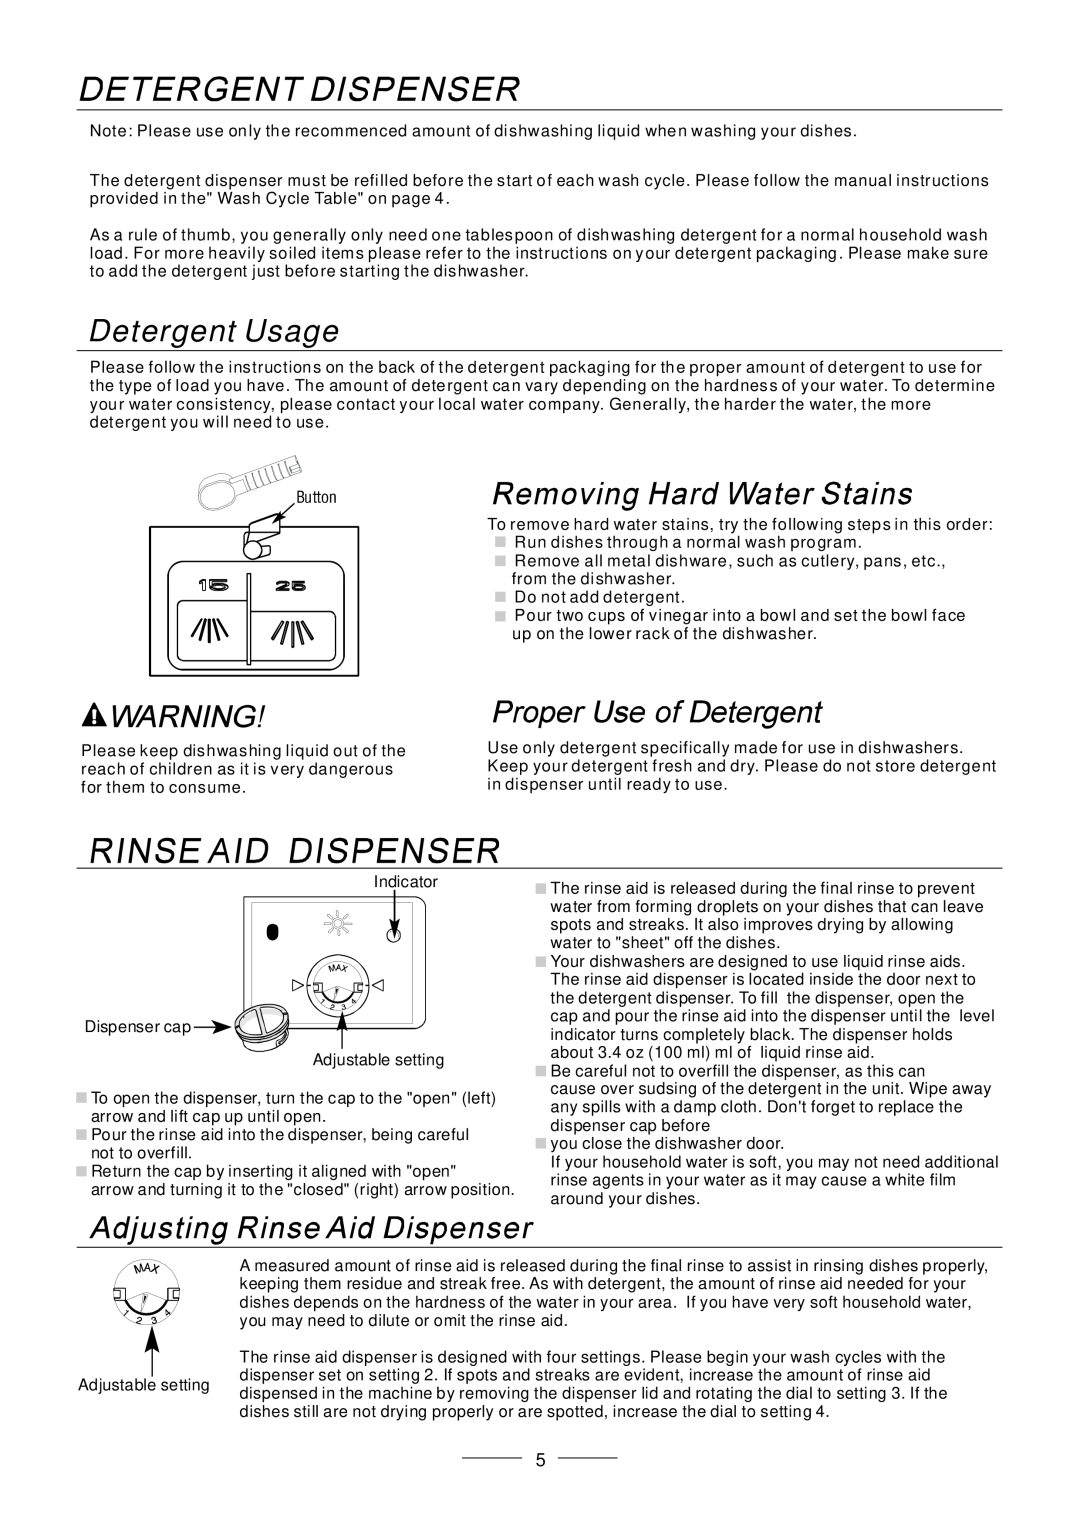 Fagor America LFA-75IT manual Detergent Usage 